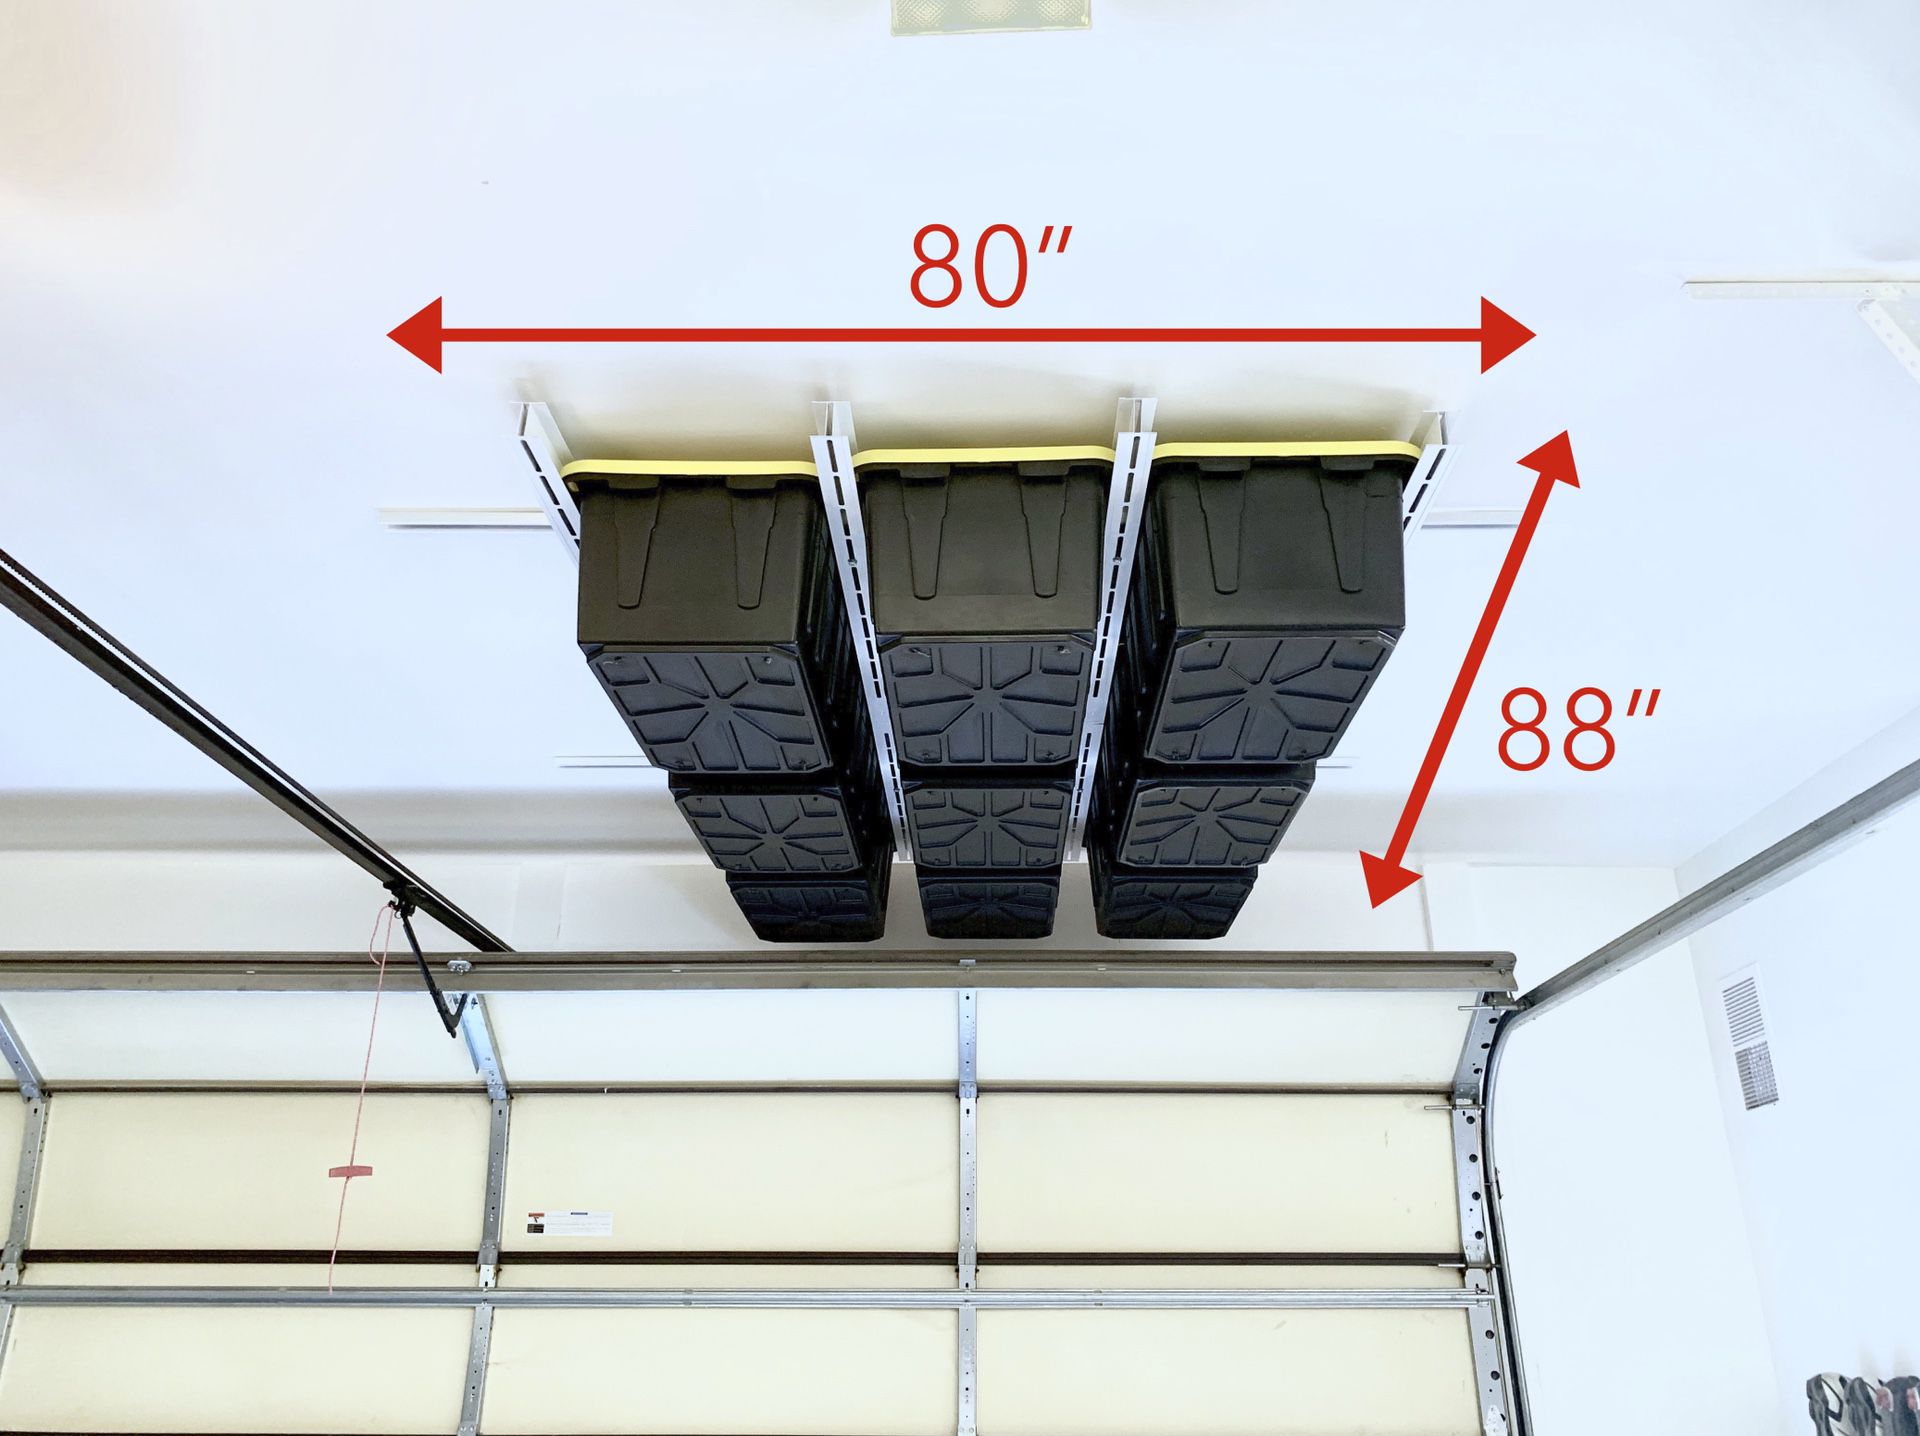 Garage Ceiling Storage Racks - Wall shelves, Tote Slide, 1,000 lb Rack